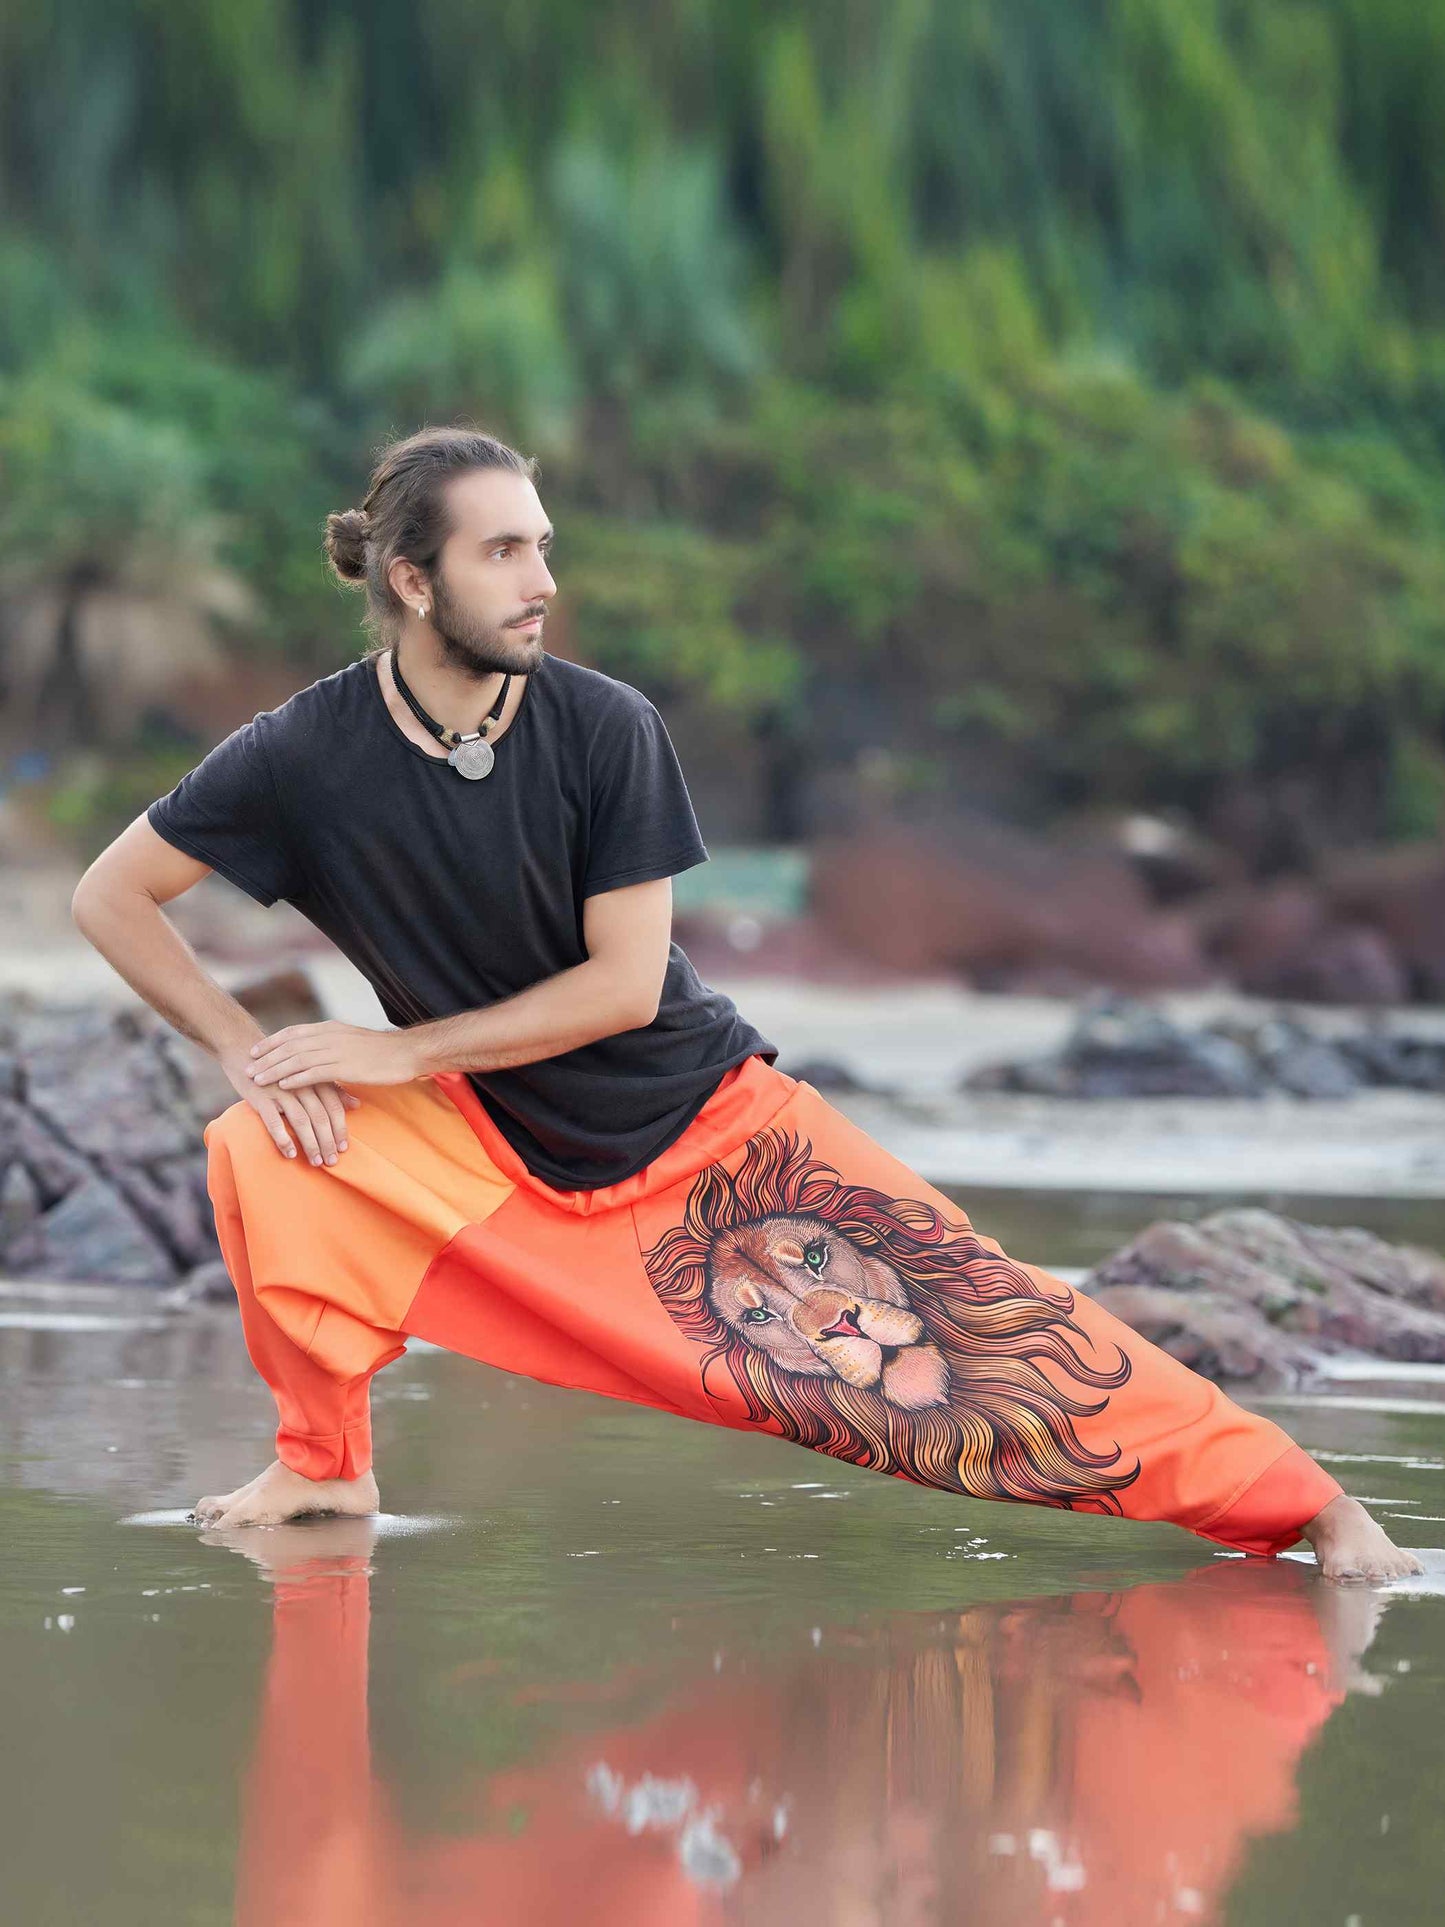 Buy Unisex Couple Hippy Lion Print Baggy Aladdin Harem Pant For Travel Yoga Dance